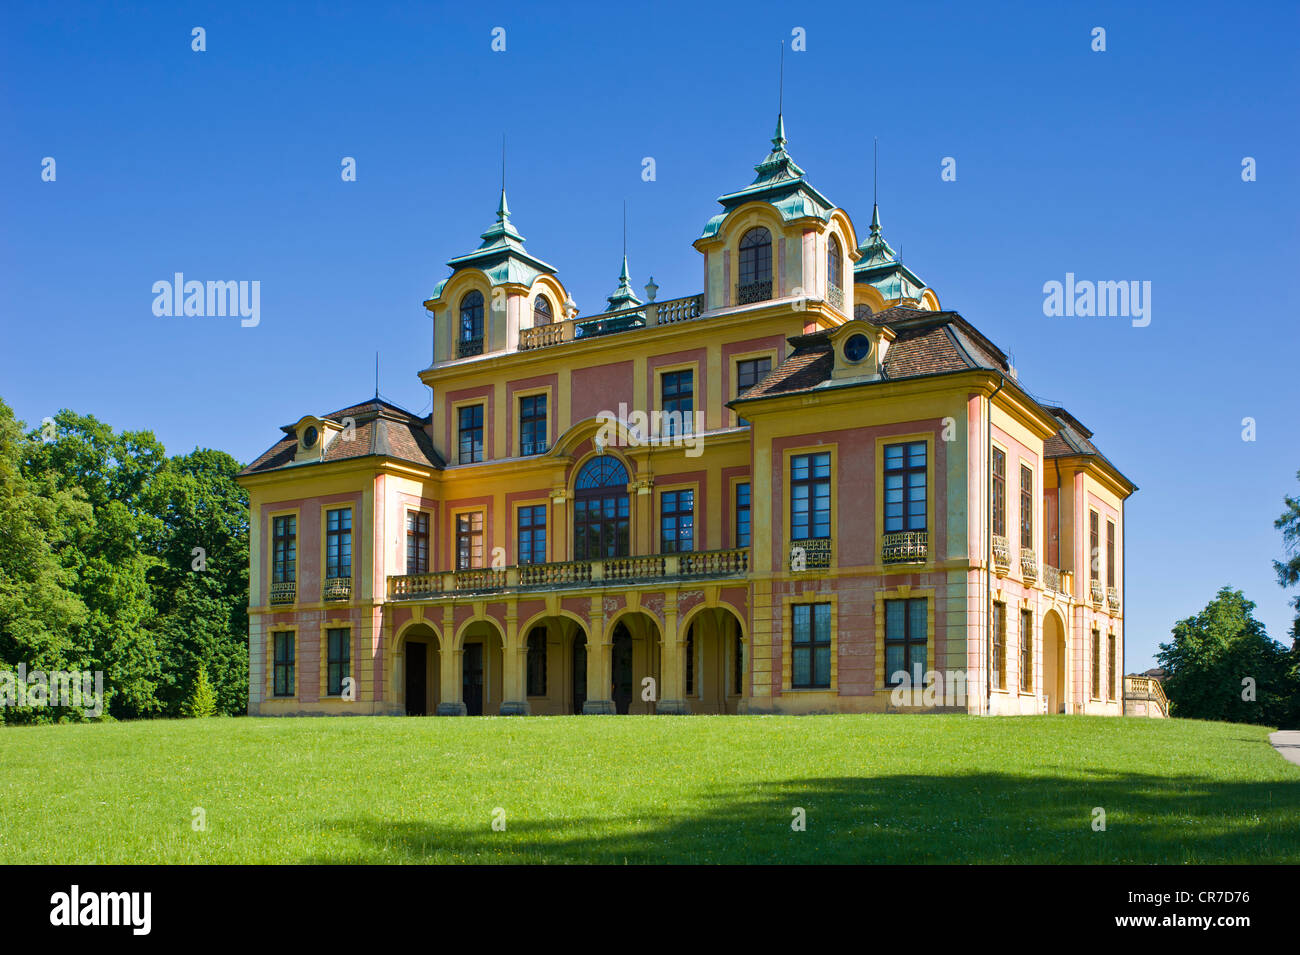 Schloss Favorite Palace, Ludwigsburg, Neckar, Baden-Wuerttemberg, Germany, Europe Stock Photo